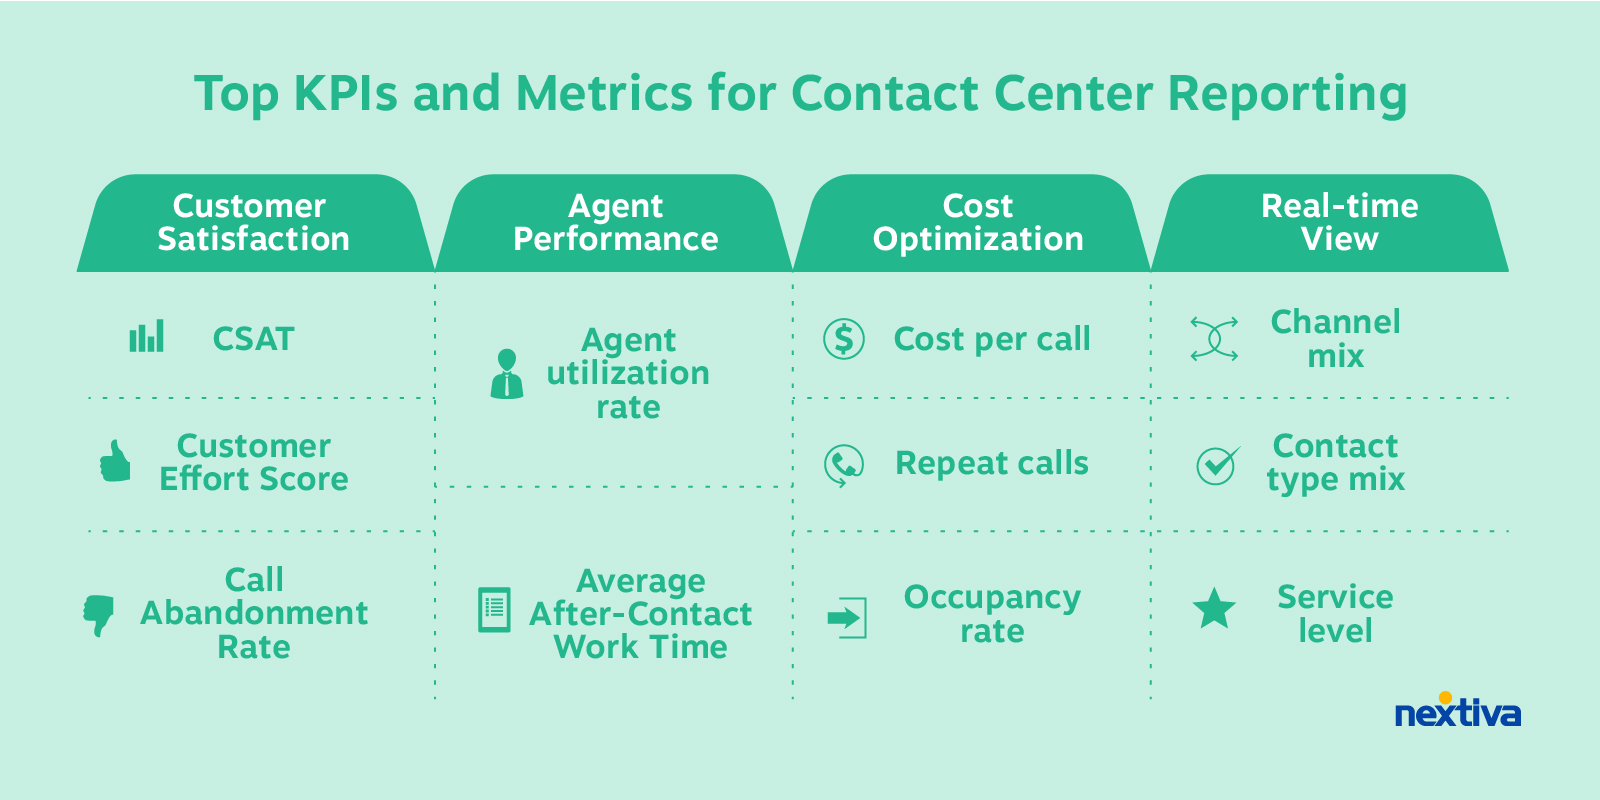 Contact Center Reporting Metrics - Overview - Nextiva